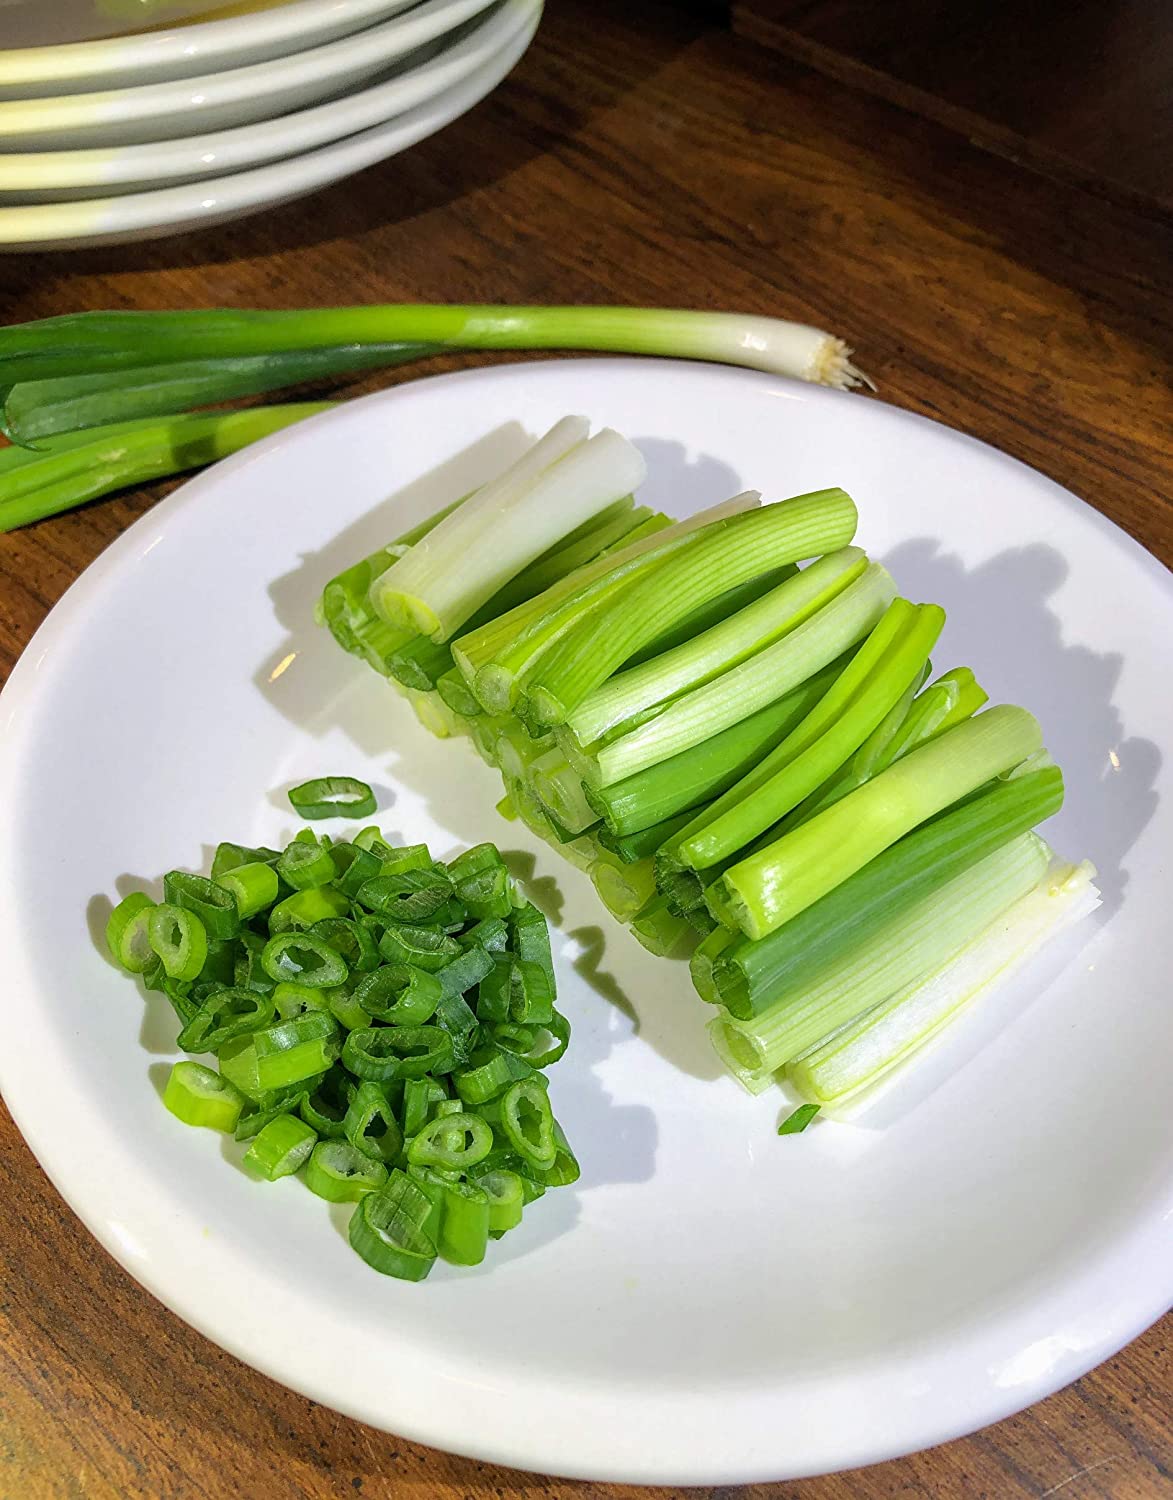 Hundredfold Japanese Evergreen White Stem Green Onion Scallion 1000 Seeds - Non-GMO Allium fistulosum, Bunching Onion for Salad or Stir-Fry